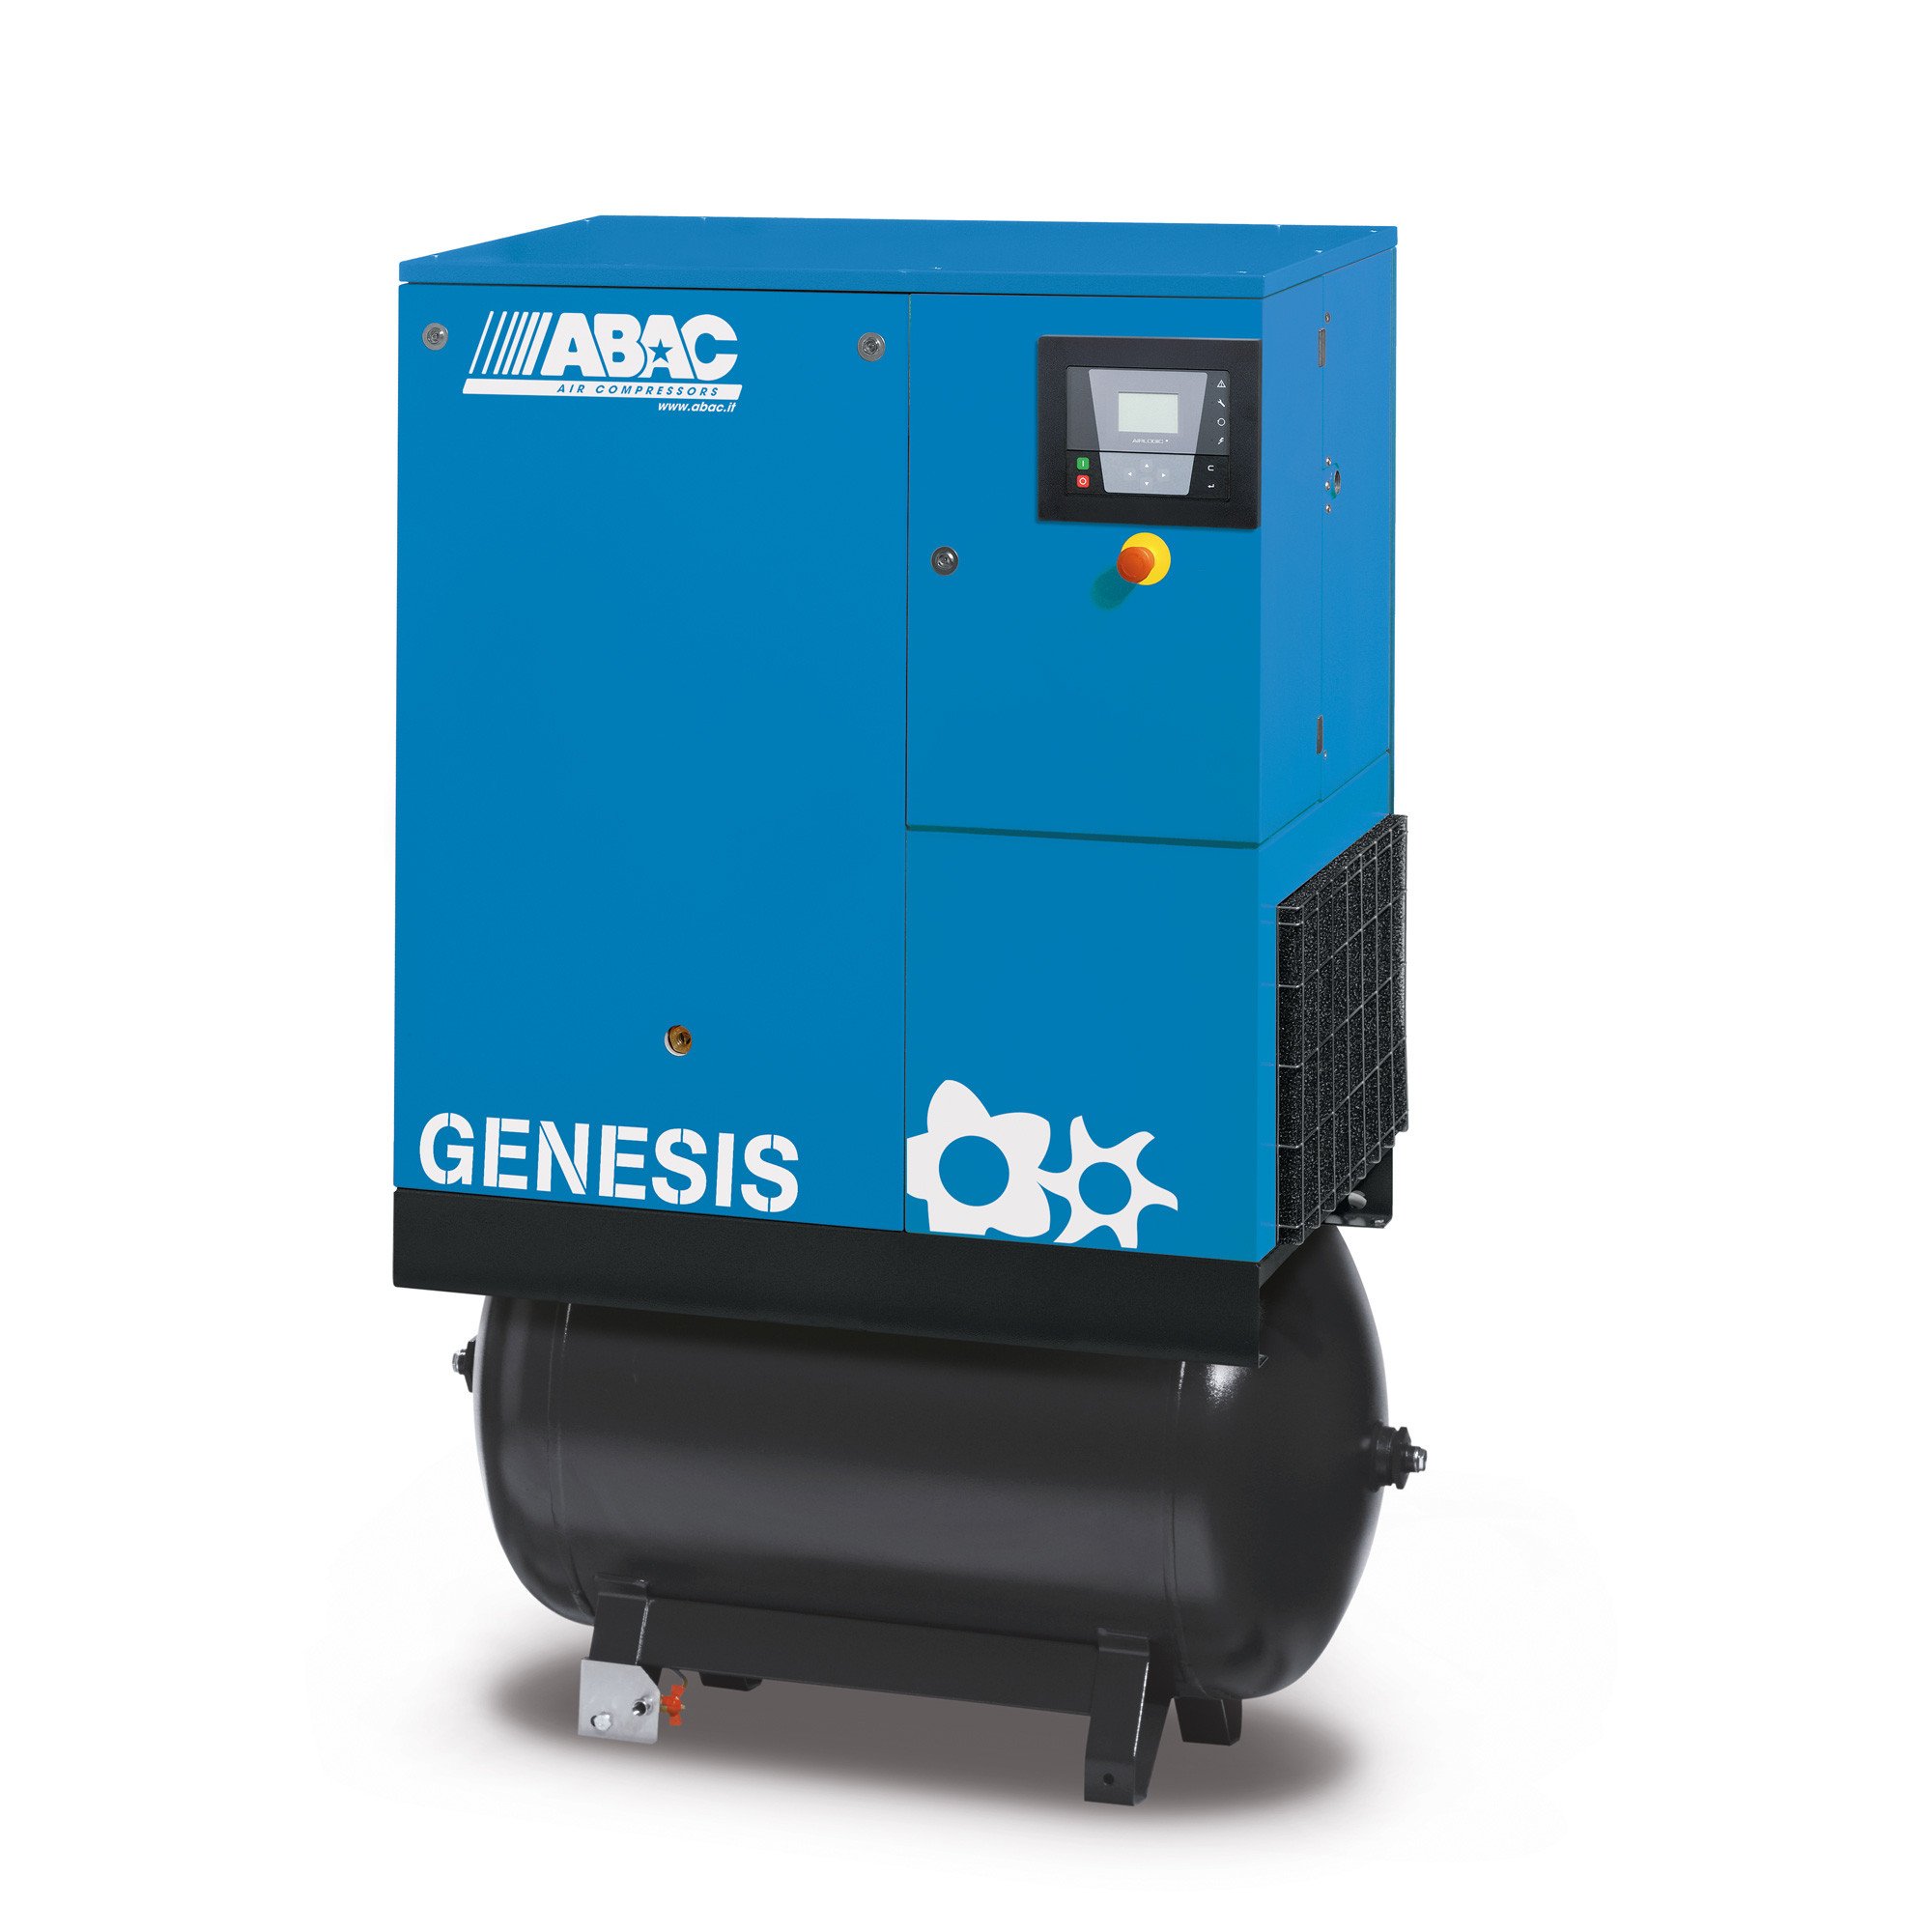 ABAC Genesis 270L, 29.31 CFM, 7.5 kW固定转速螺杆空压机